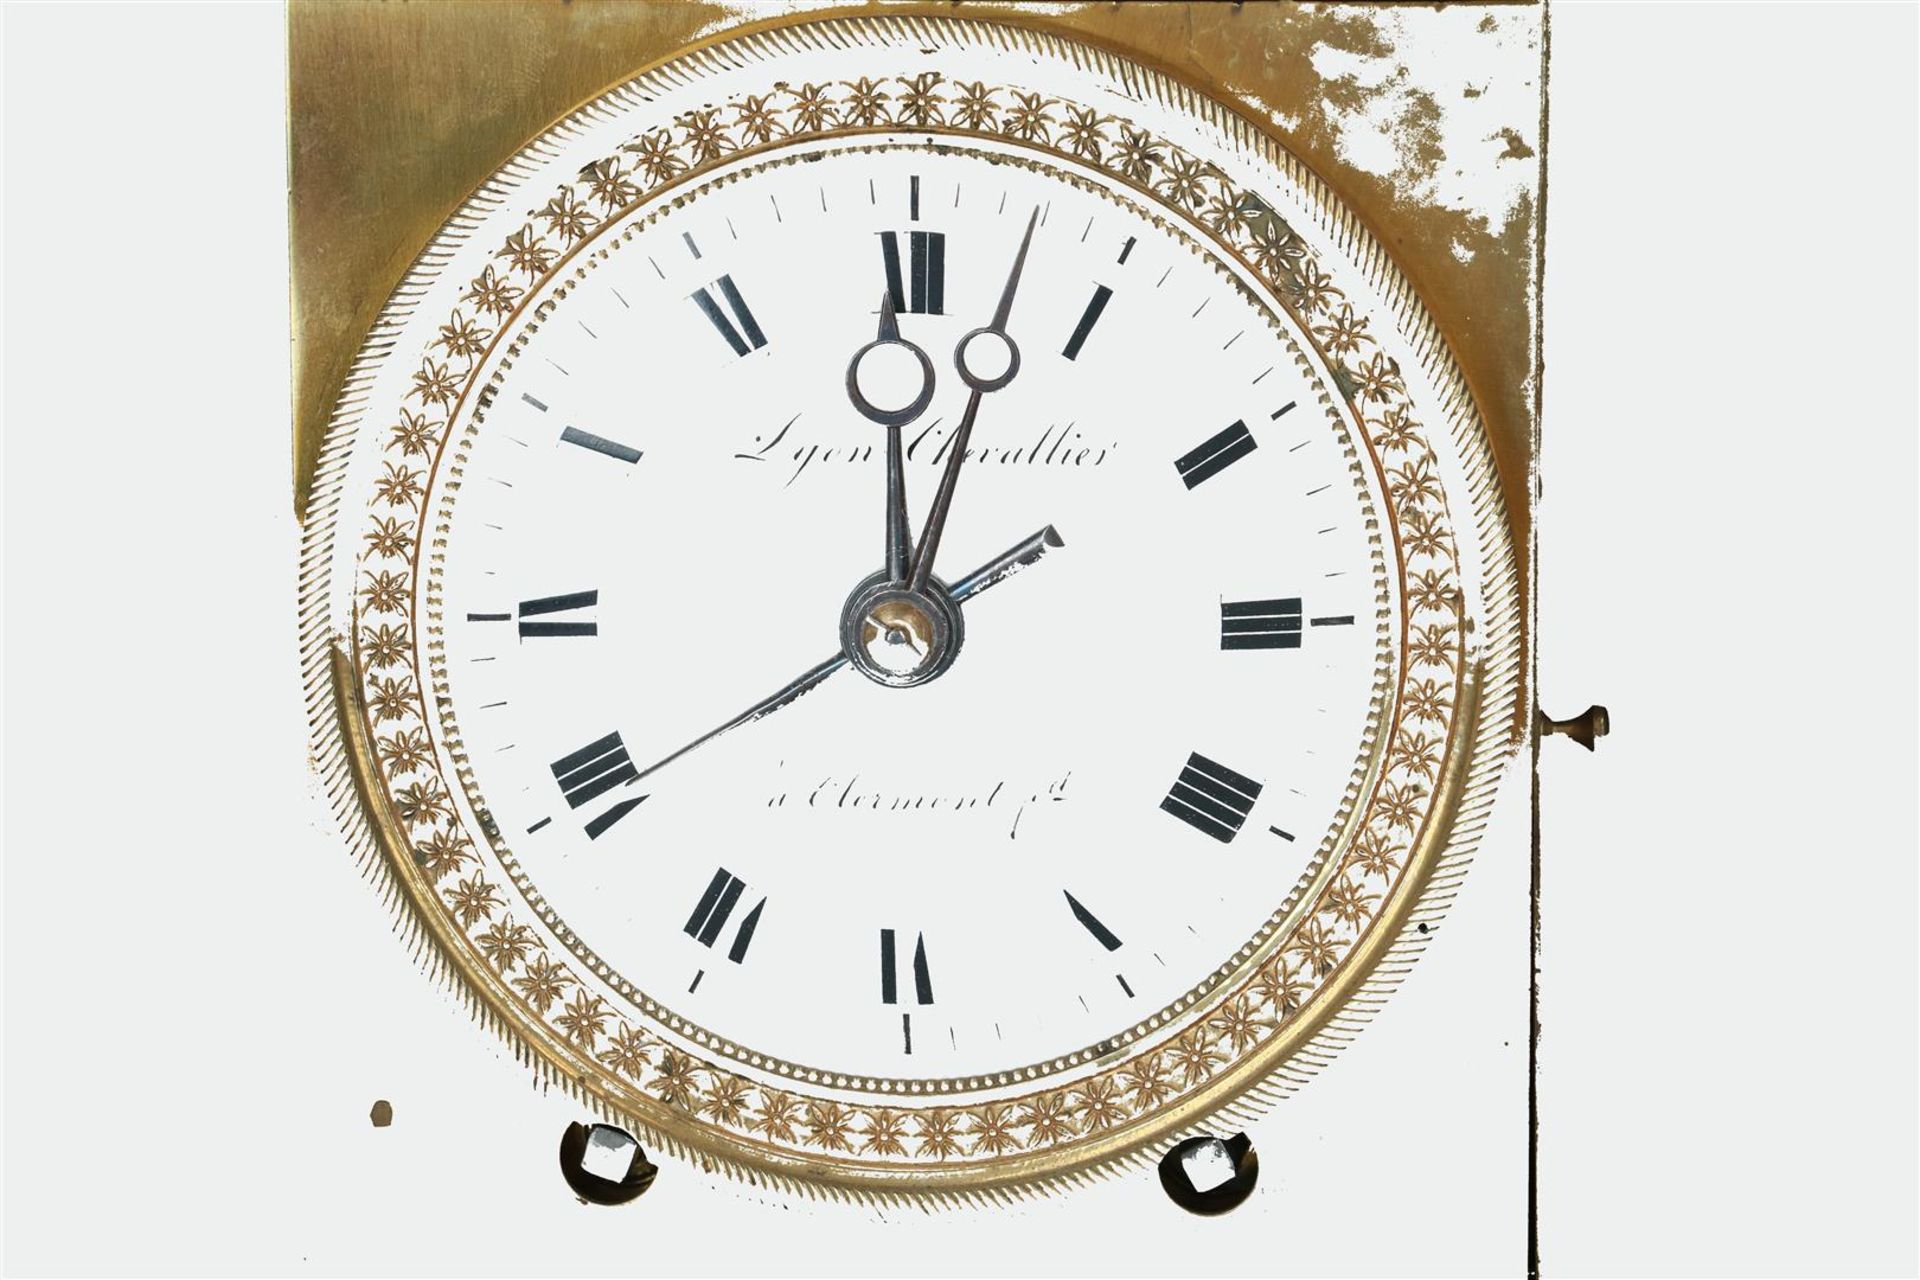 Capucine travel clock, Lyon Chevallier à Clermont ferrand. Around 1820. - Image 5 of 6